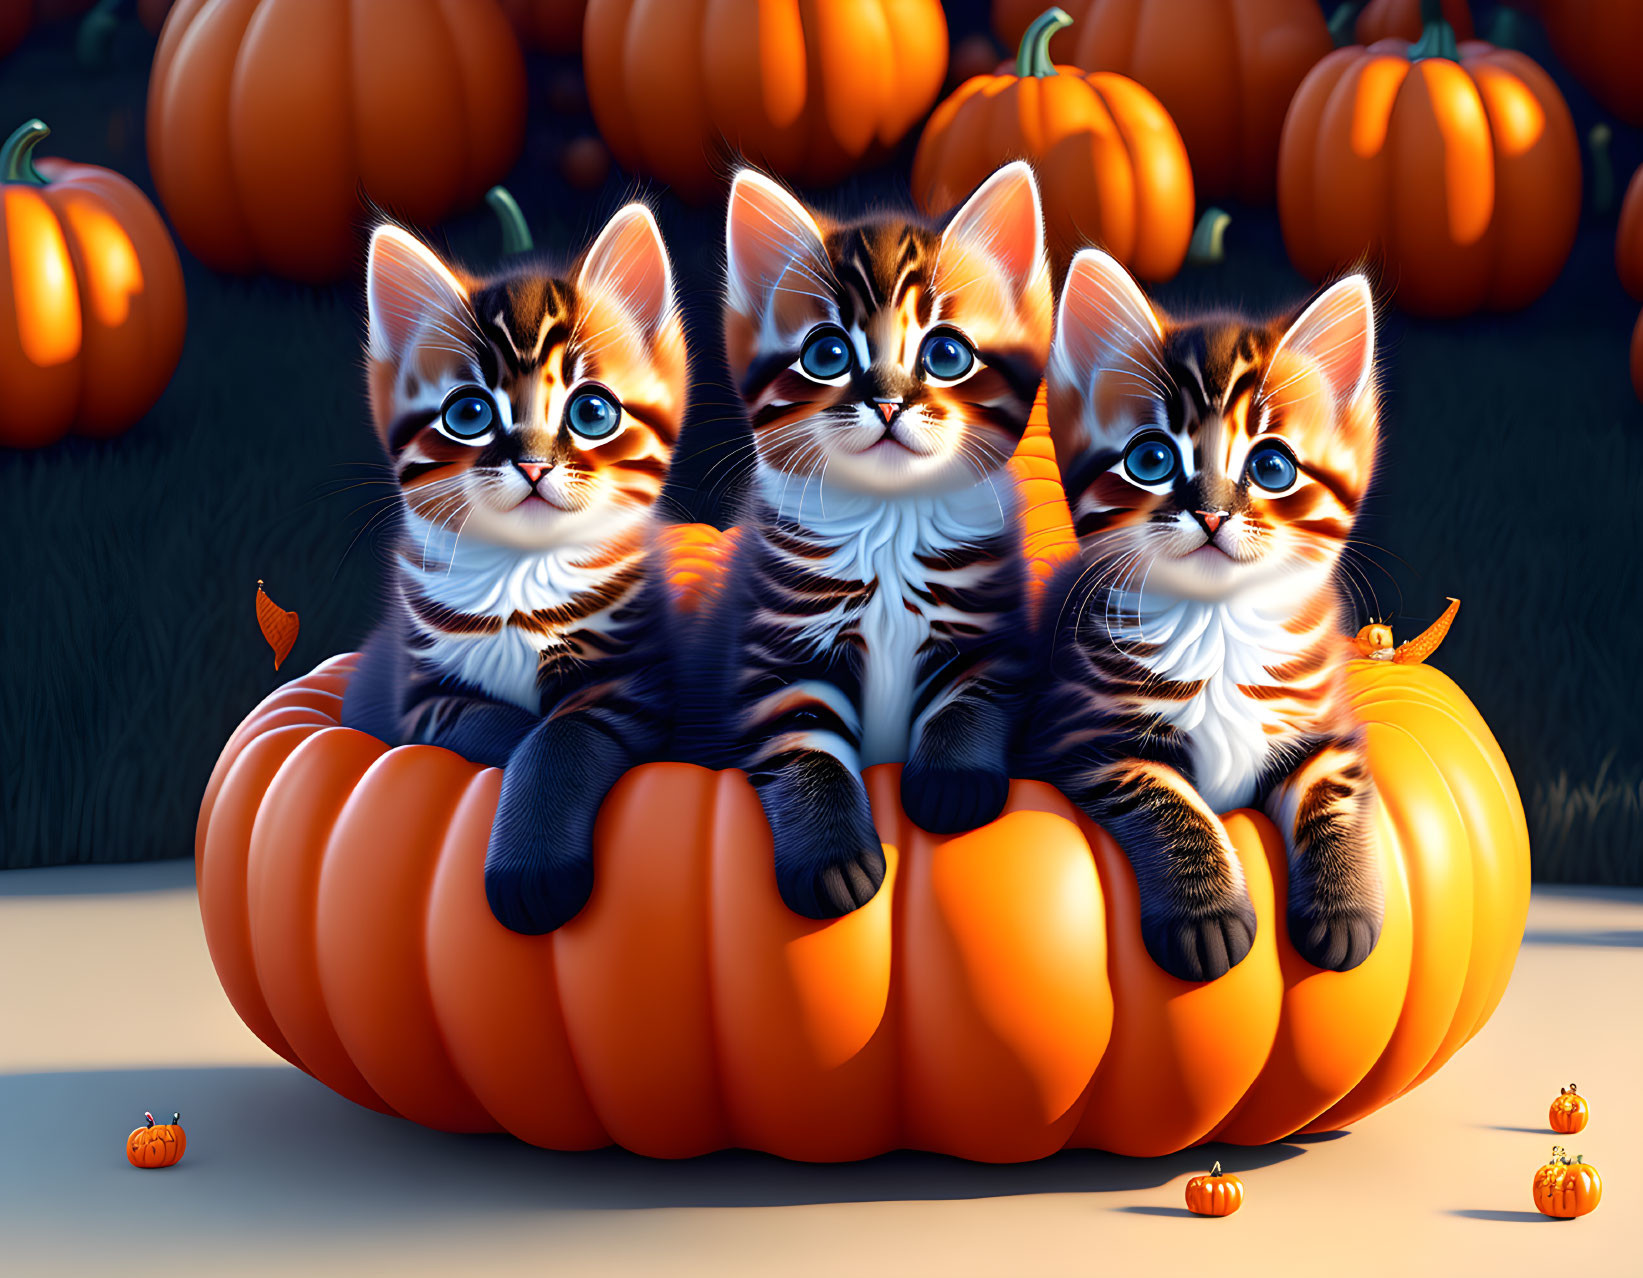 3 Cute Lil Kittens In The Pumpkin